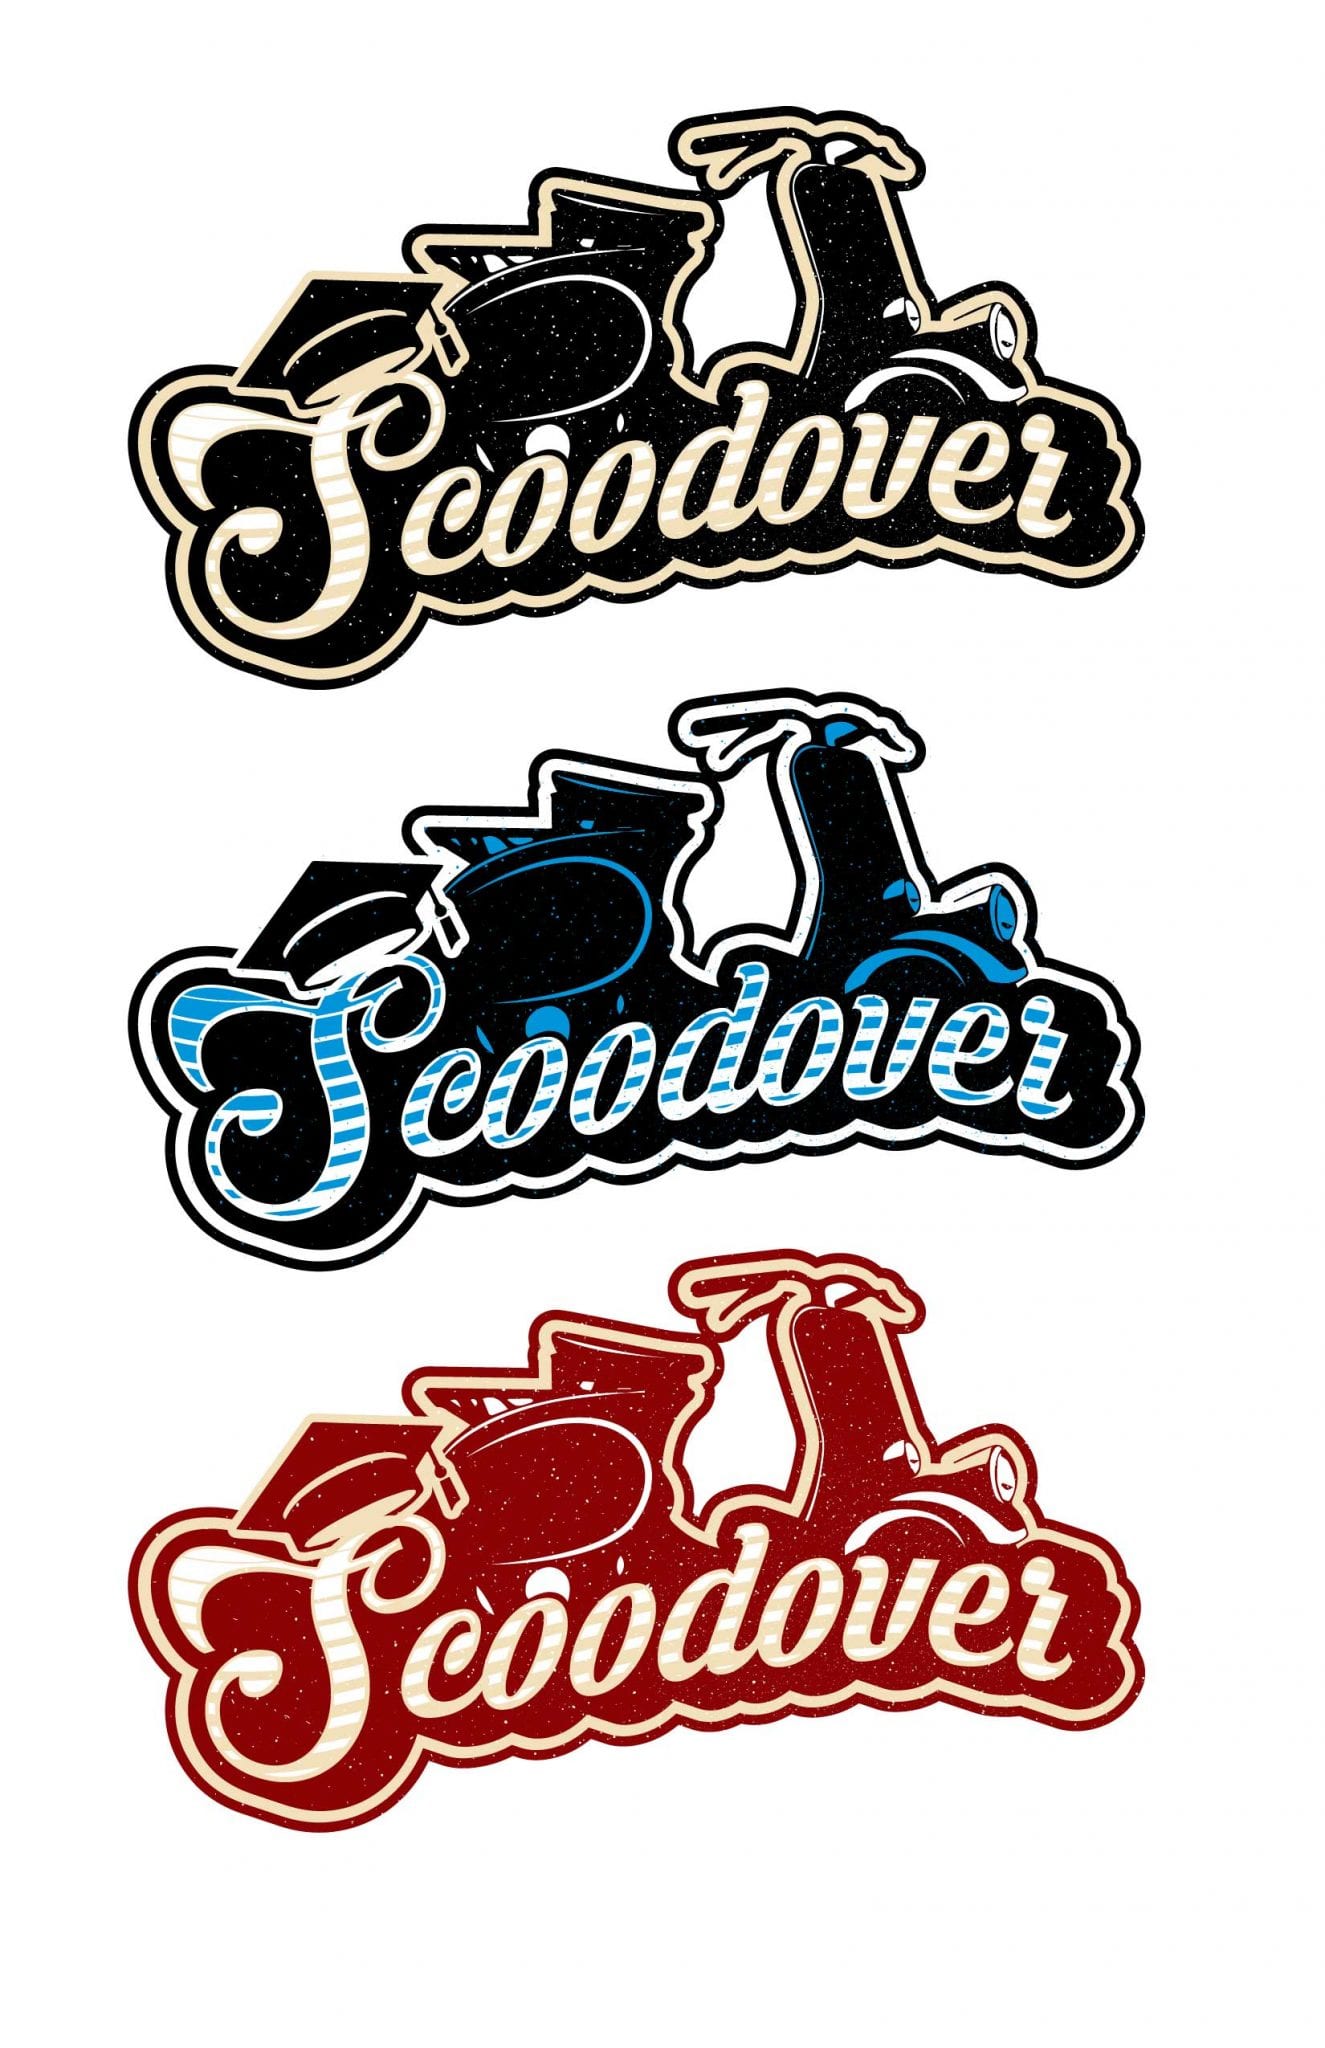 Scoodover cool logo design